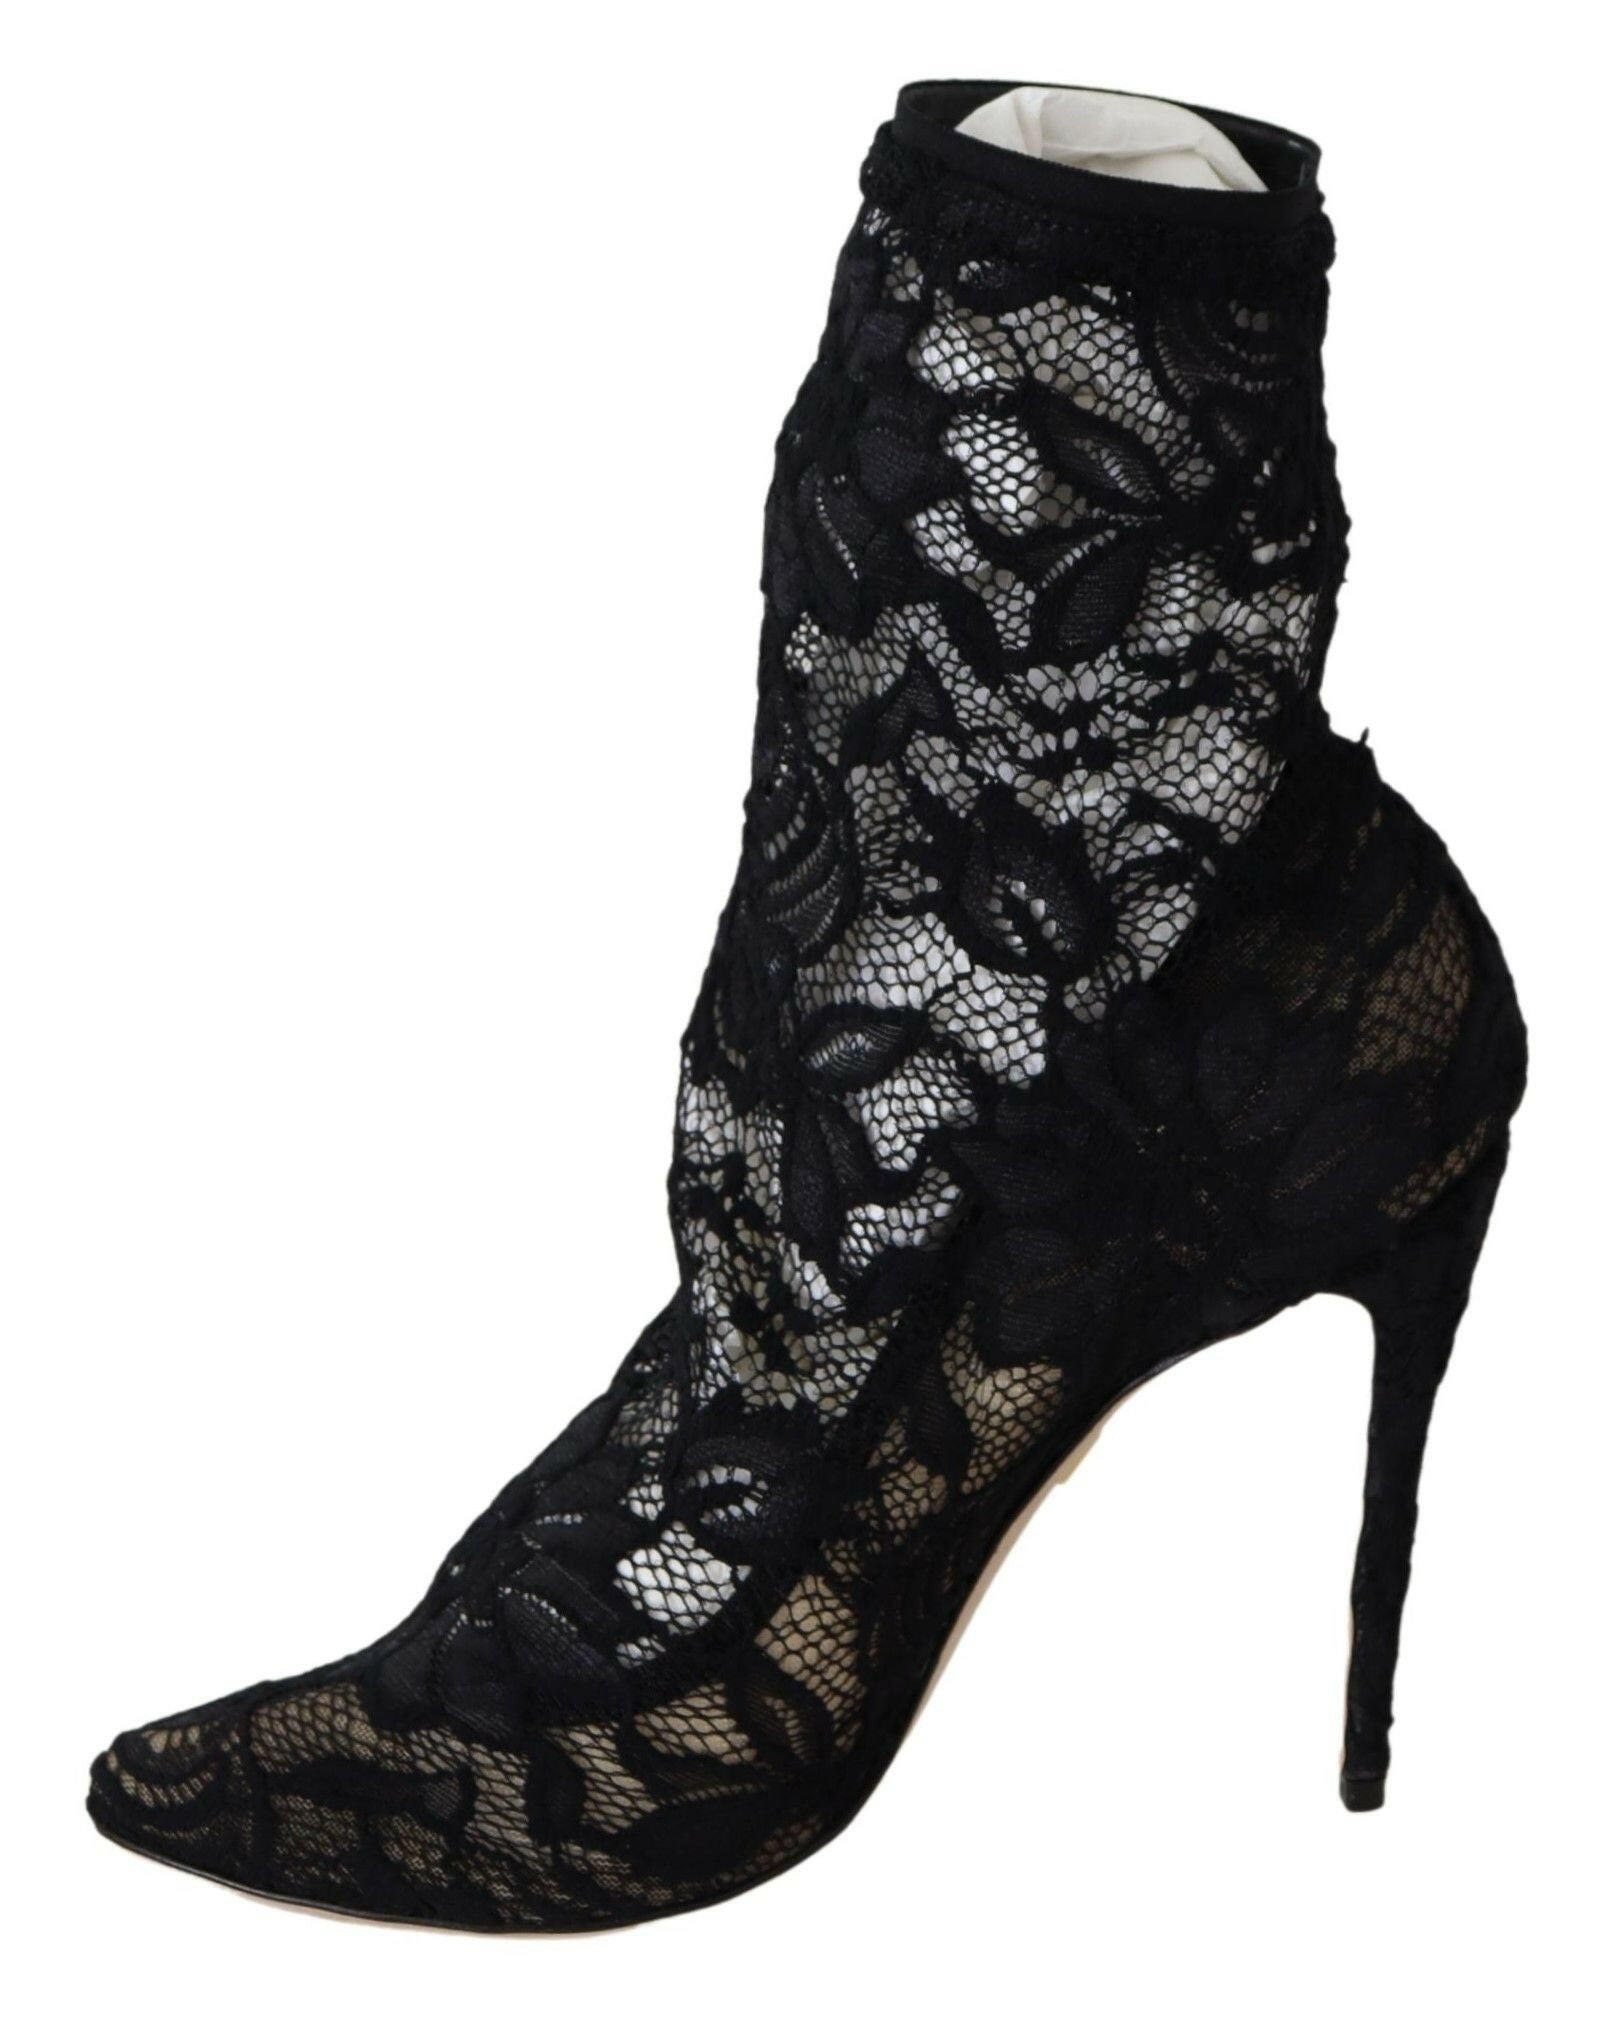 Dolce & Gabbana Black Lace Taormina High Heel Boots Shoes - GENUINE AUTHENTIC BRAND LLC  